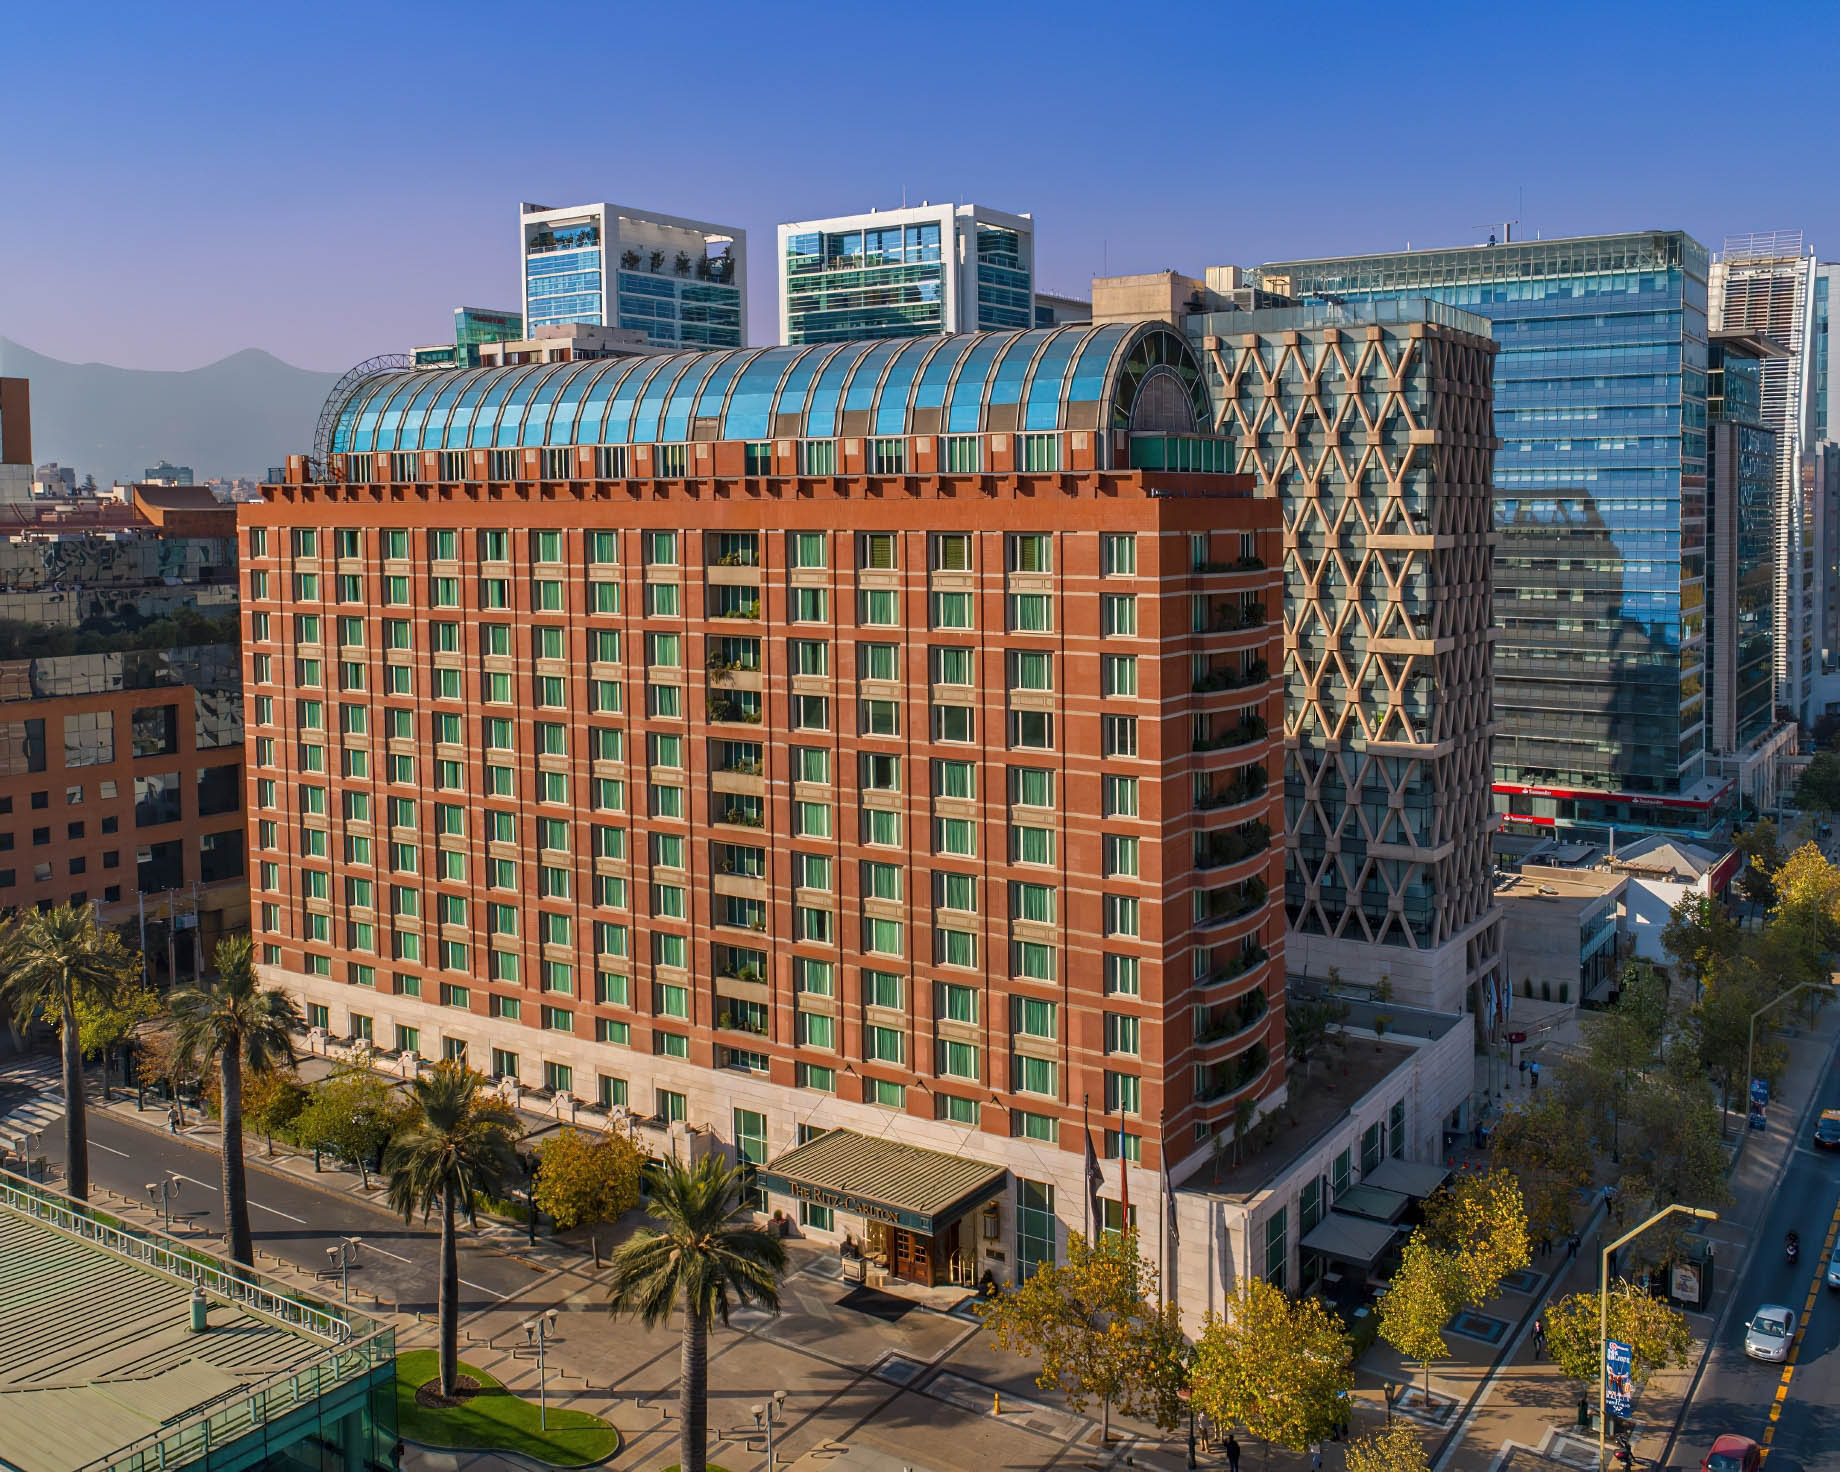 The Ritz-Carlton, Santiago Hotel – Santiago, Chile – Exterior Aerial View